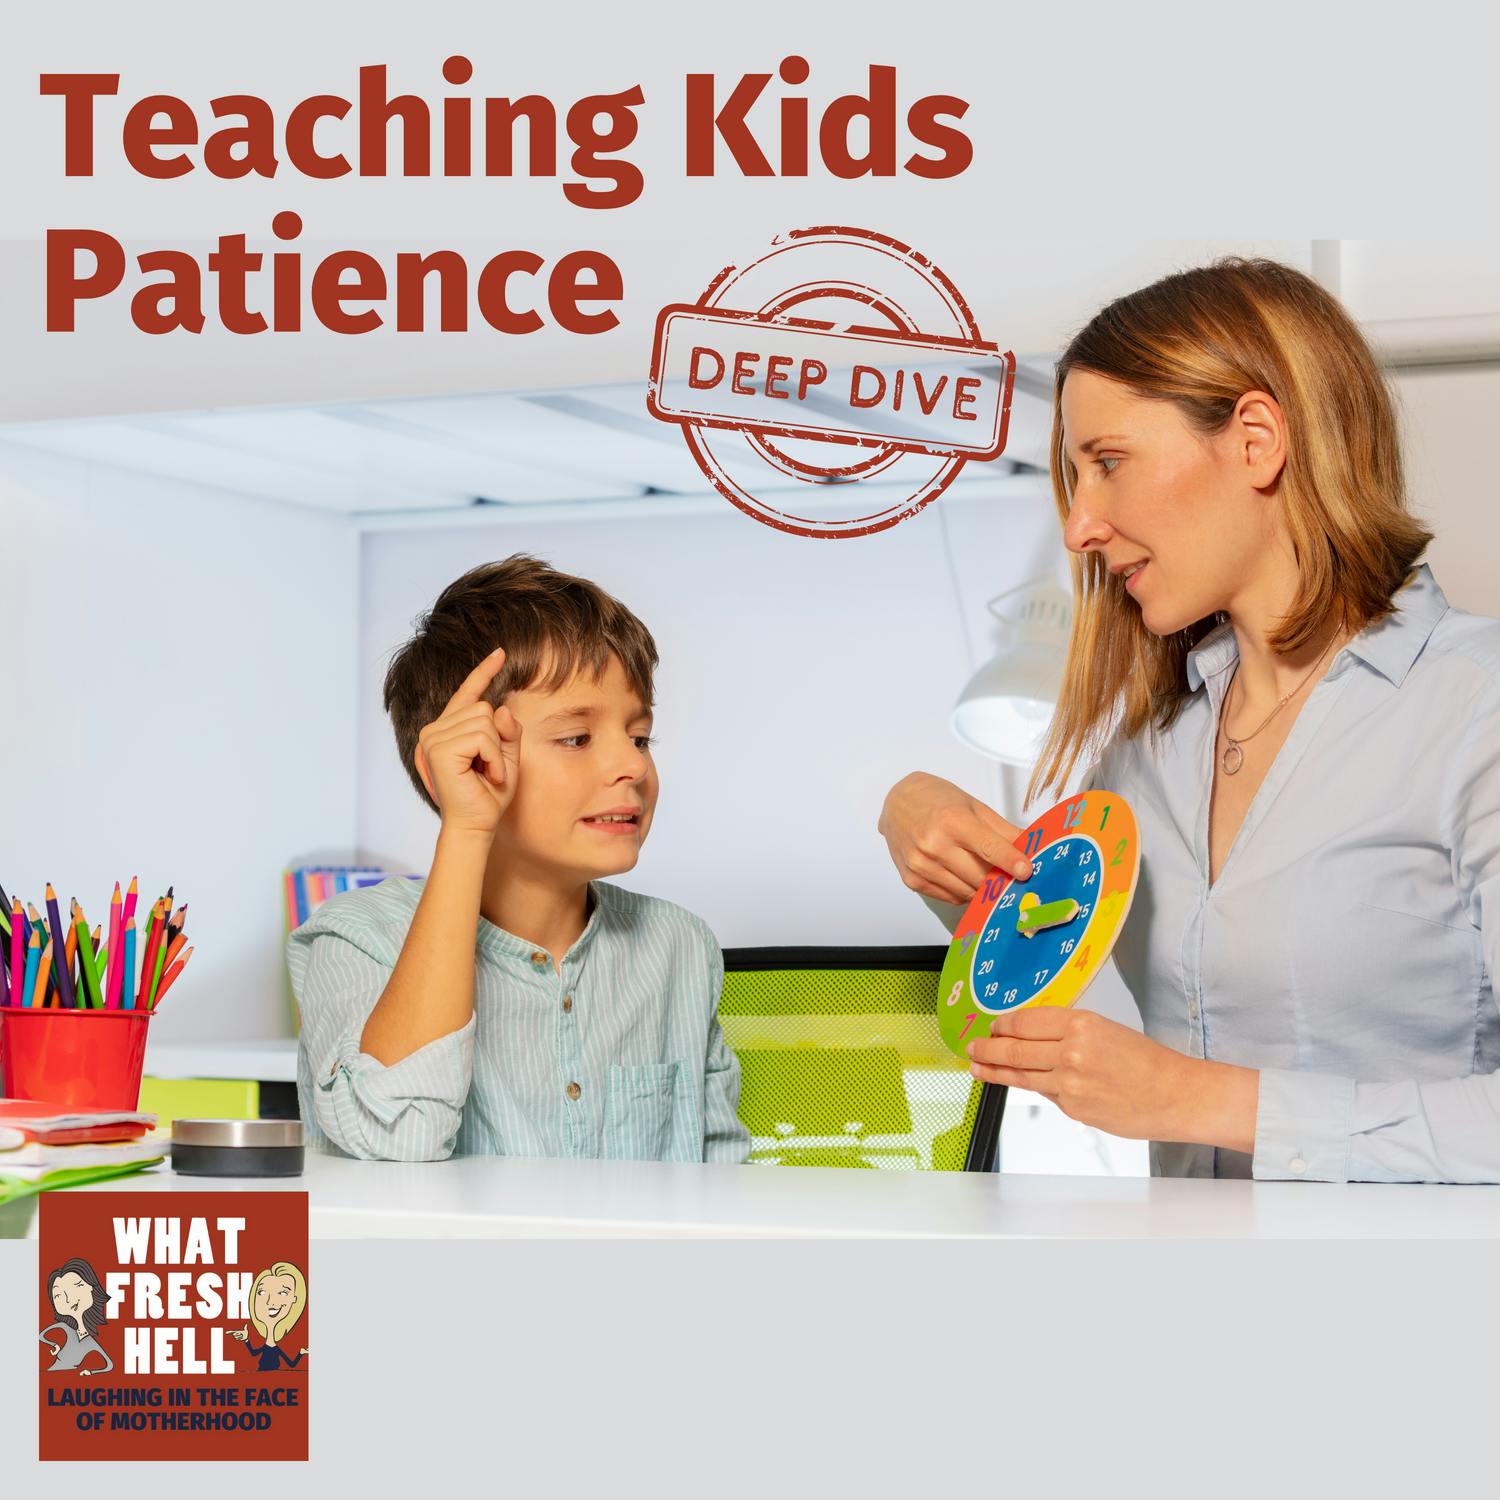 DEEP DIVE: Teaching Kids Patience